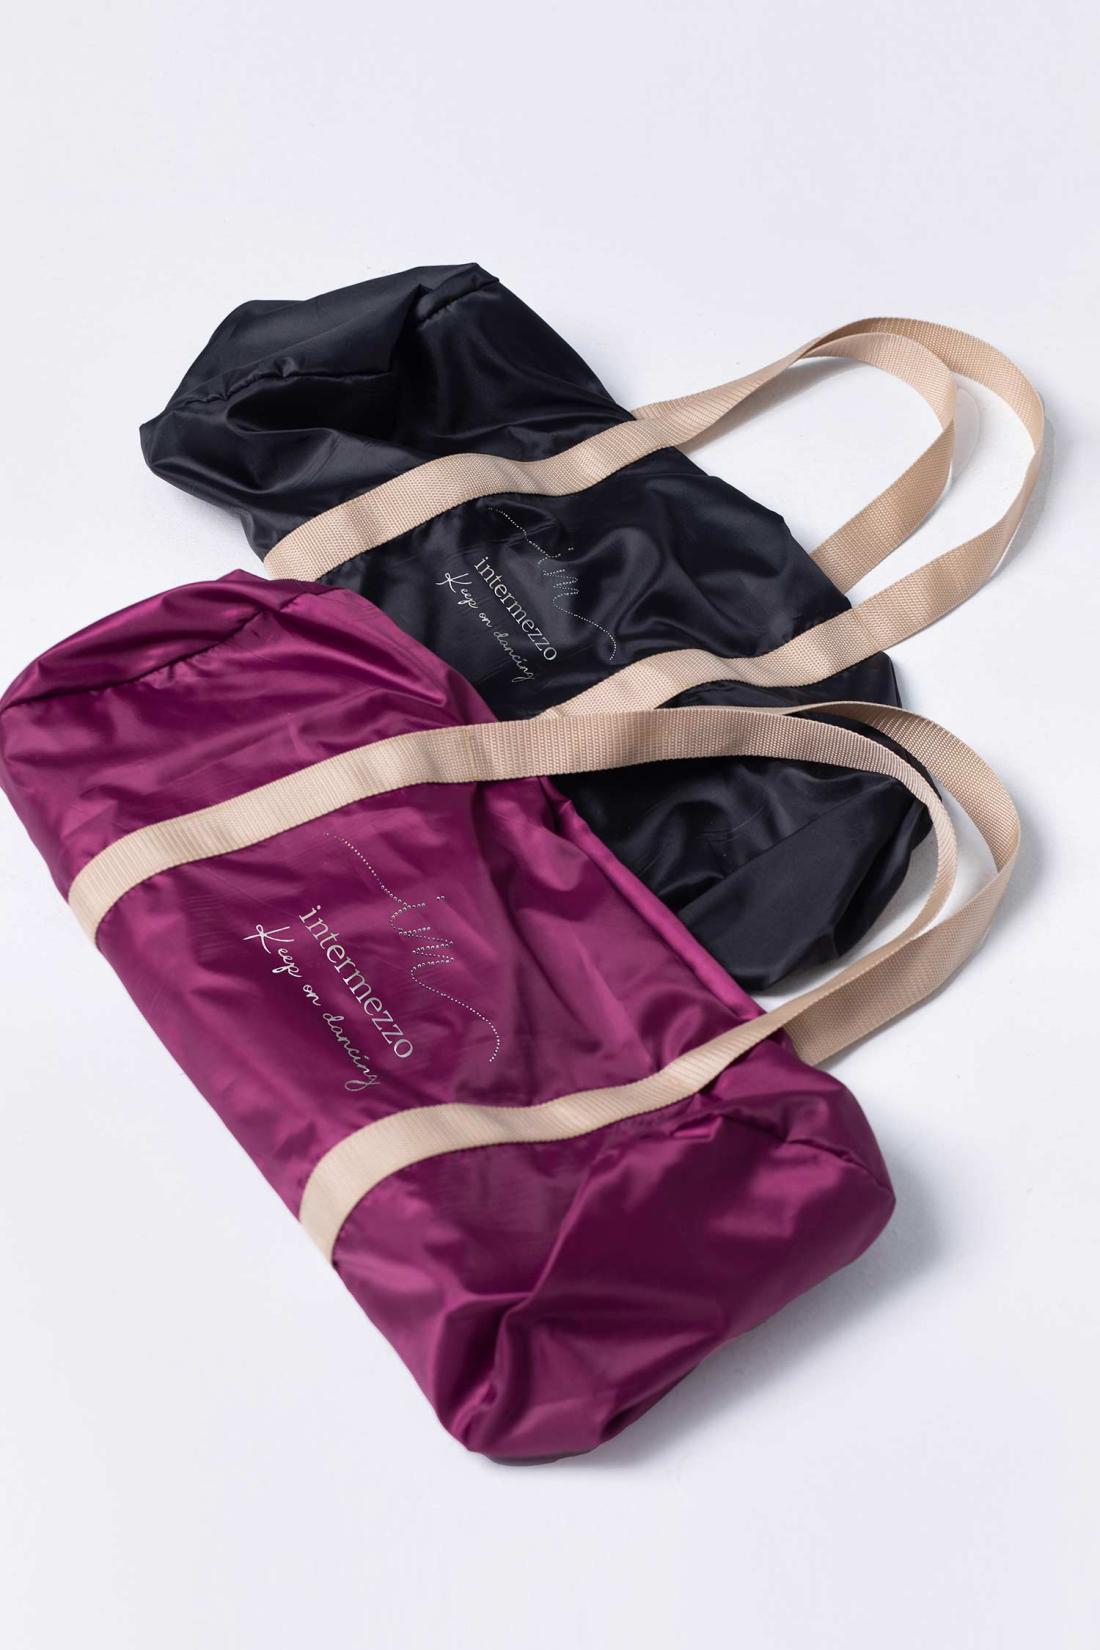 Perspiration fabric Bag with inside pocket and shiny logo Intermezzo dance ballet